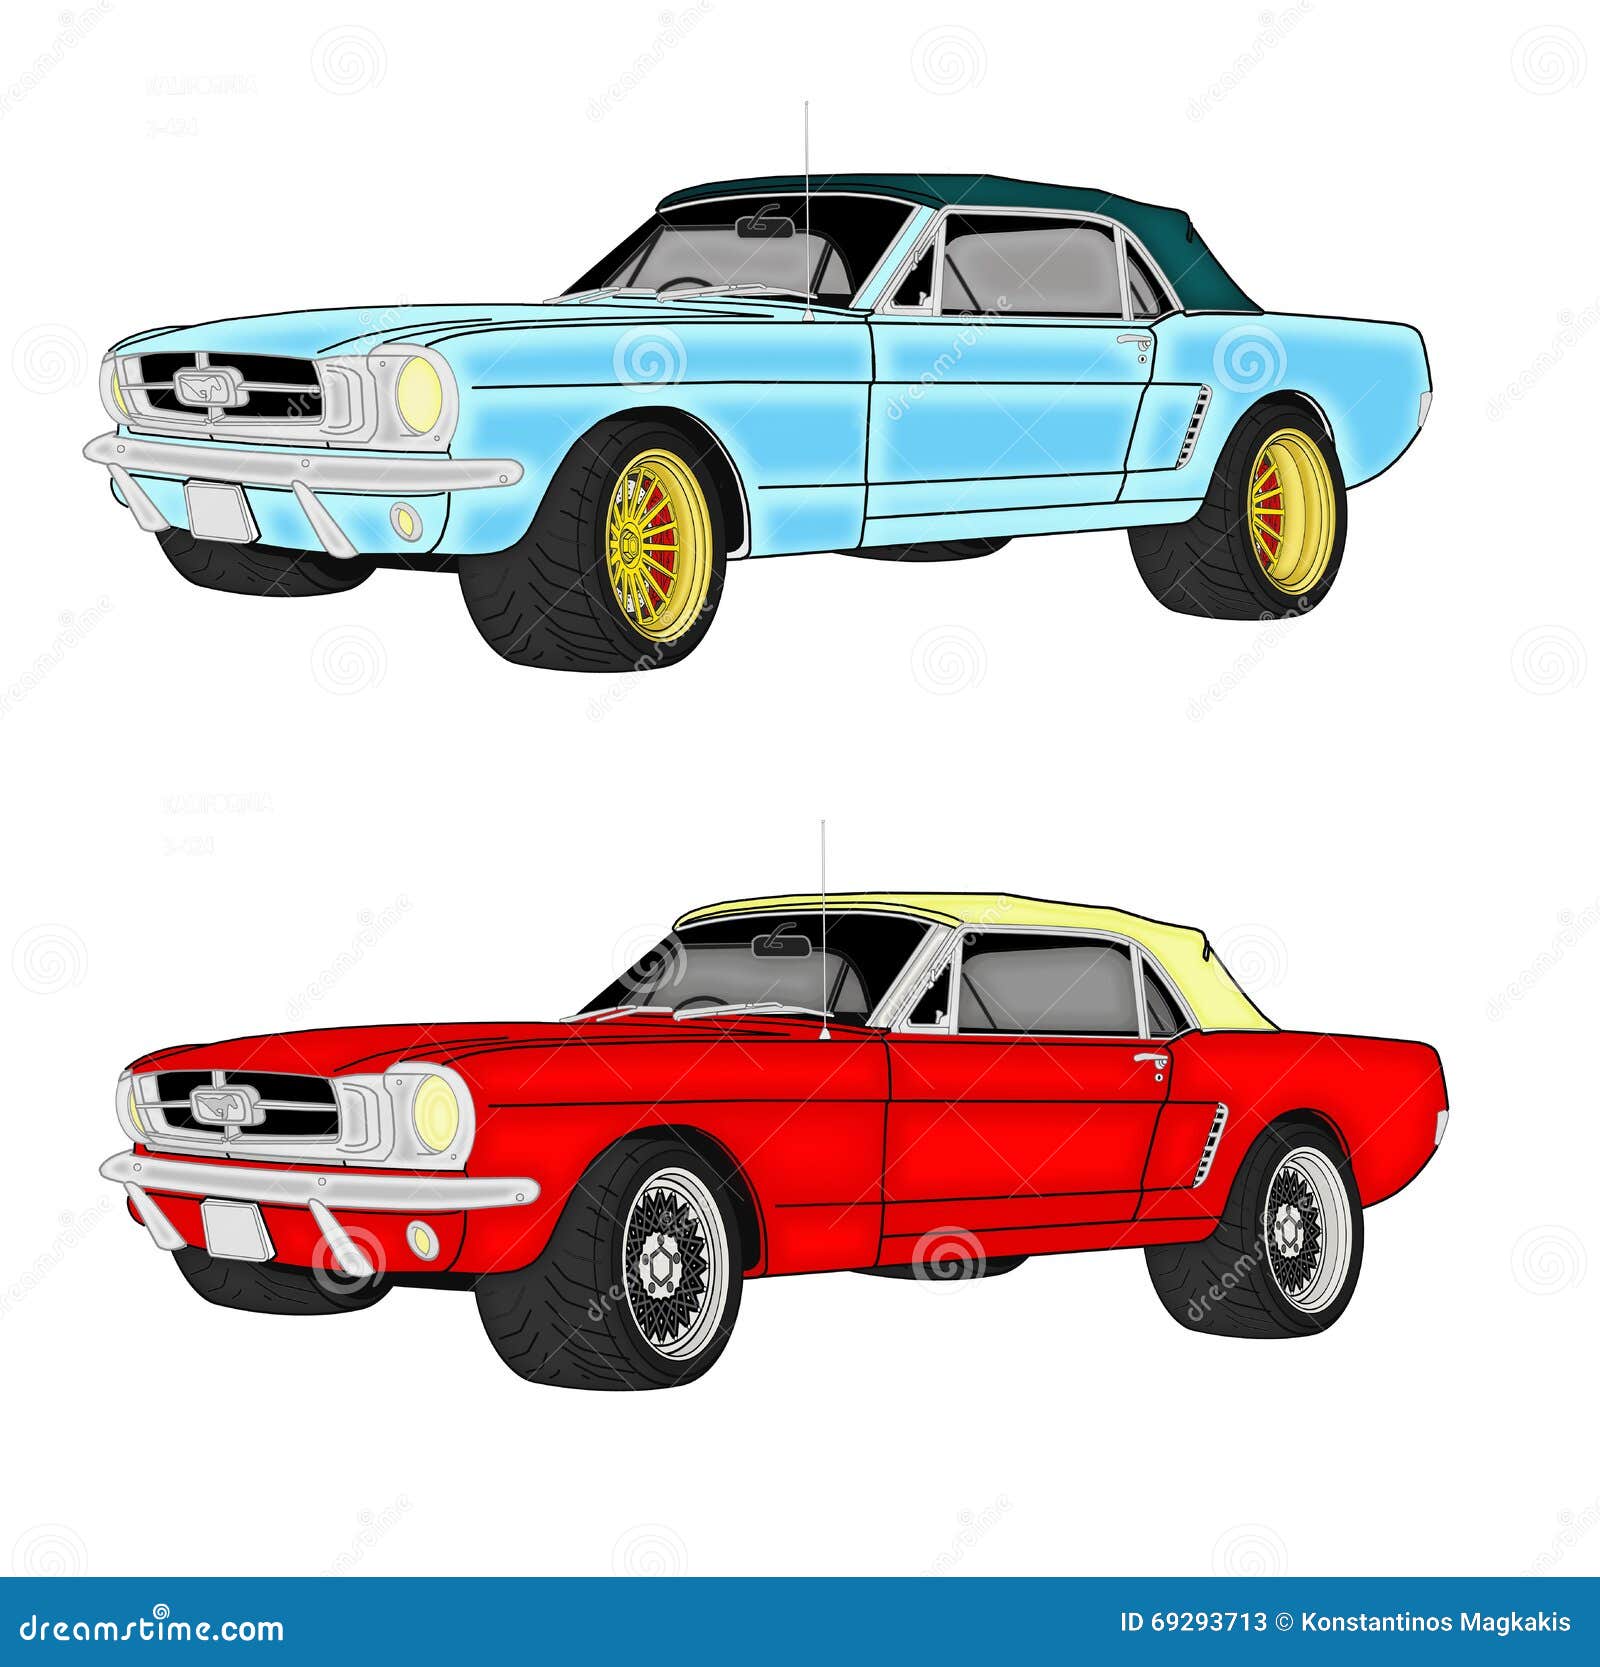 Mustang cars stock illustration. Illustration of roadster - 69293713